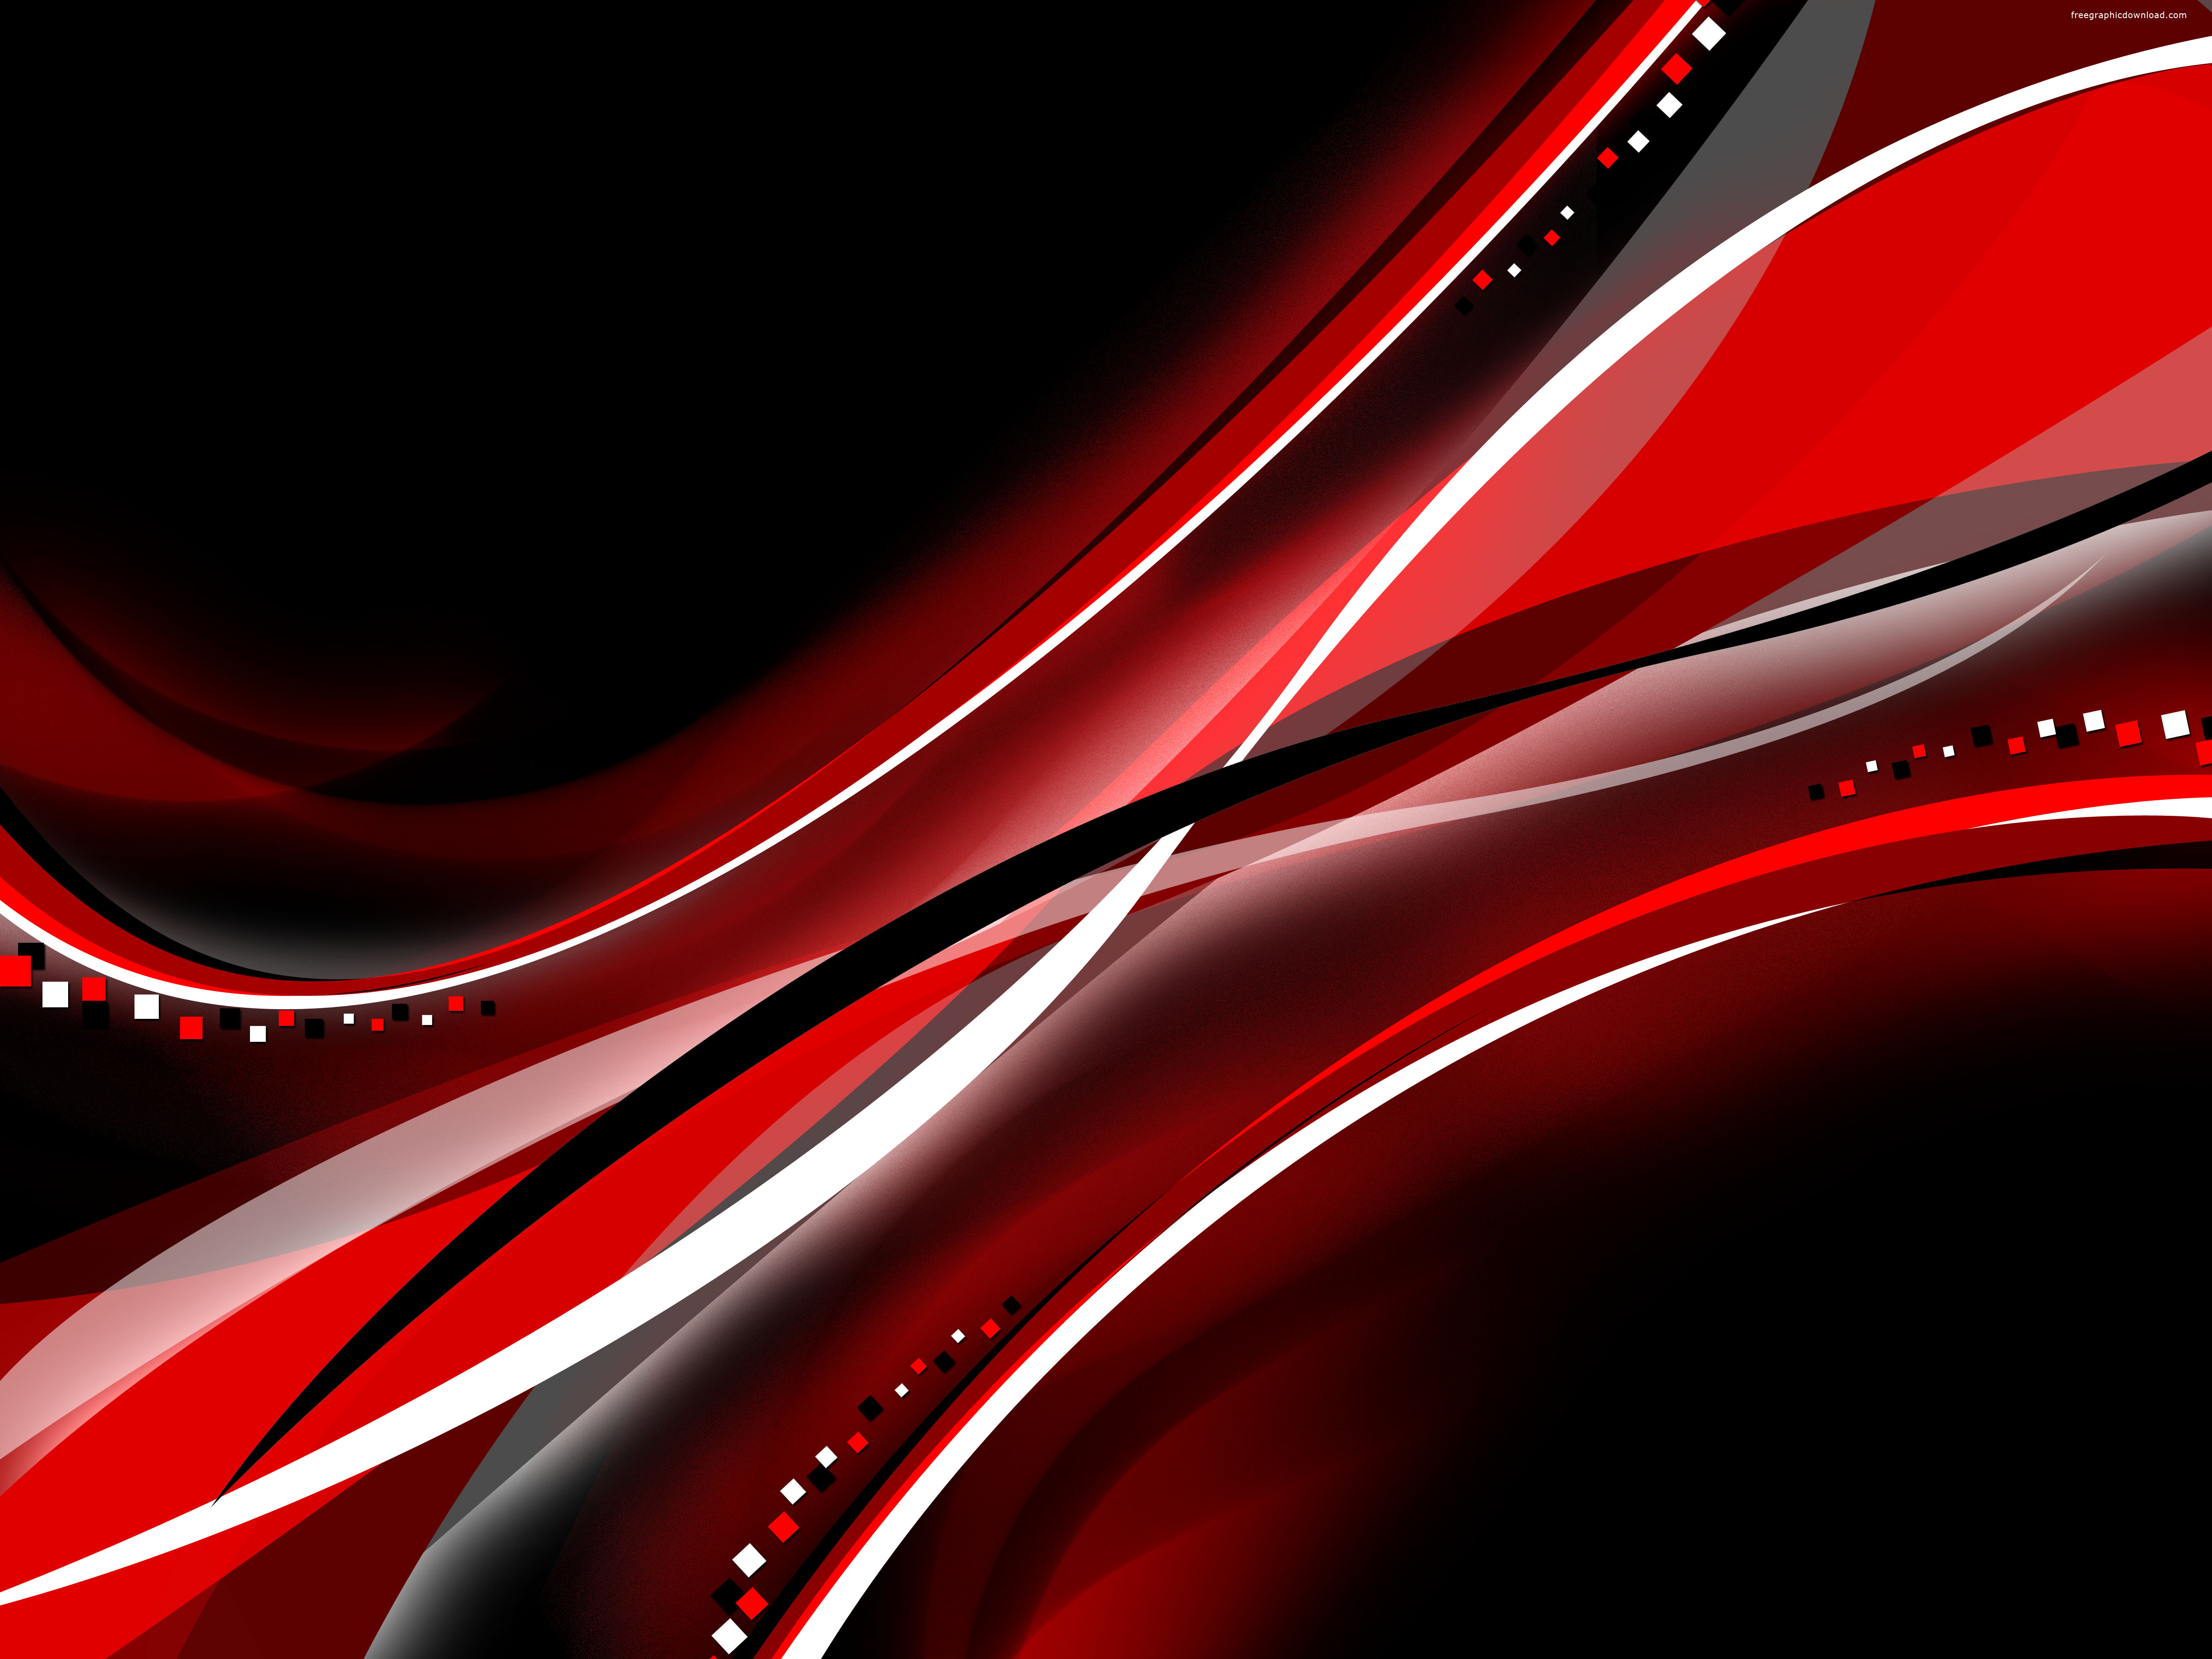 Black And Red Abstract Wallpaper - WallpaperSafari